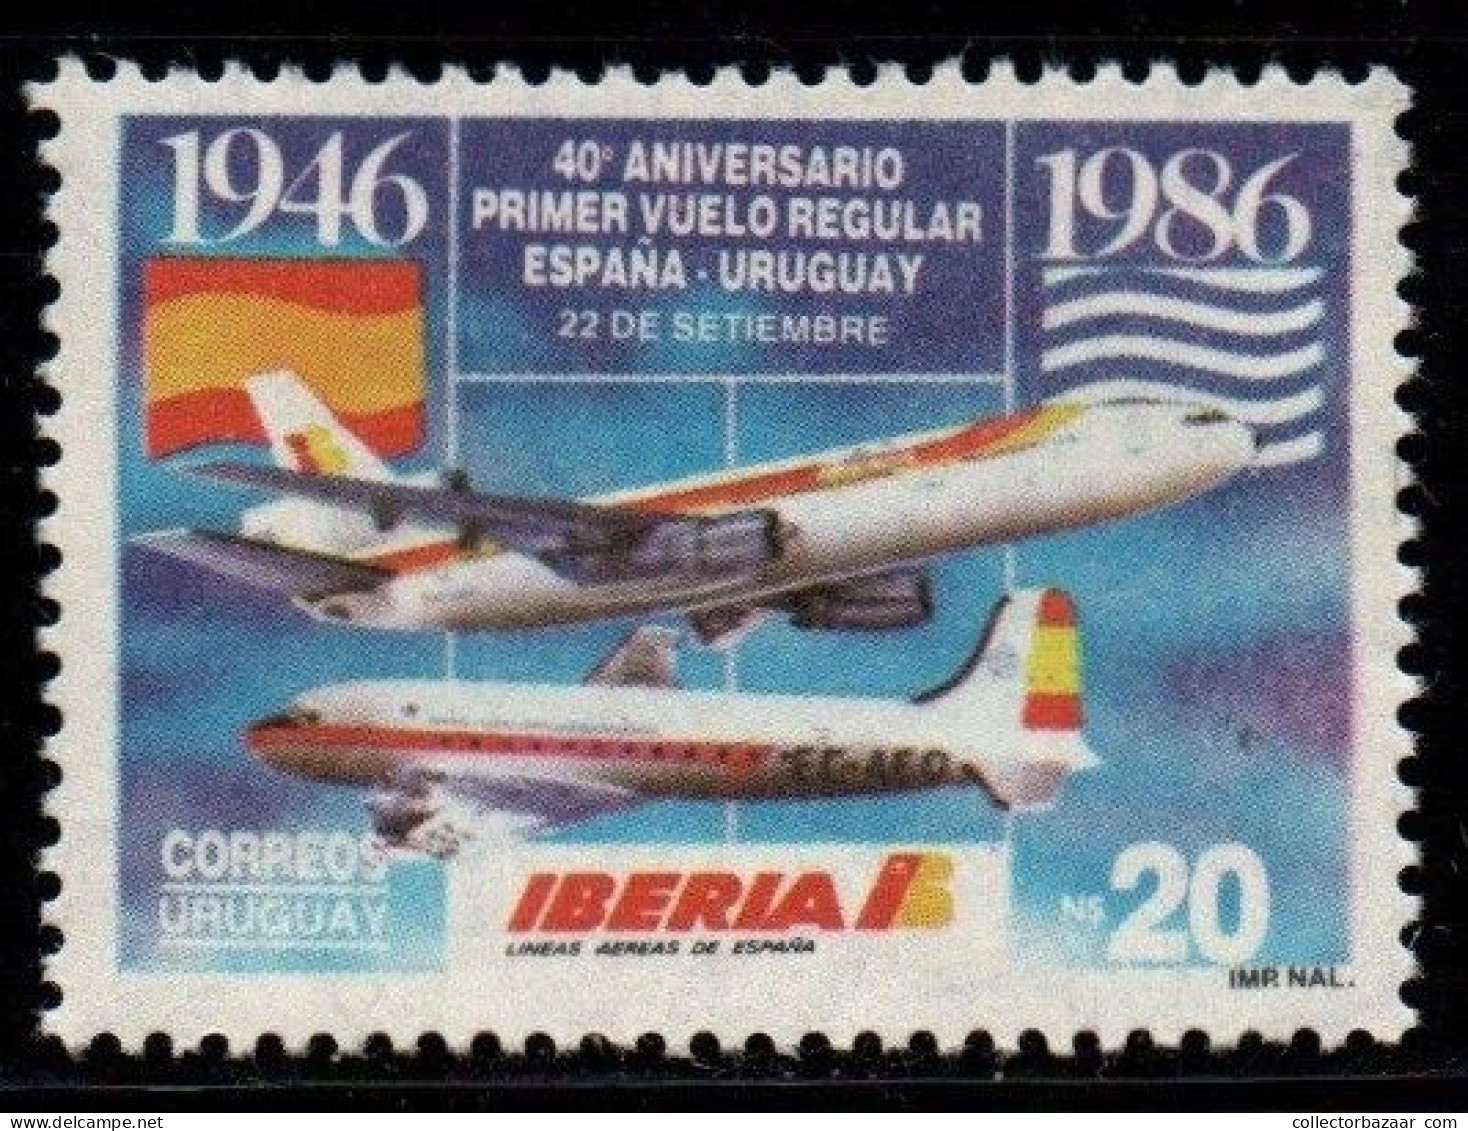 1986 Uruguay Scheduled Flights Uruguay-Spain 40th Anniversary #1222 ** MNH - Uruguay